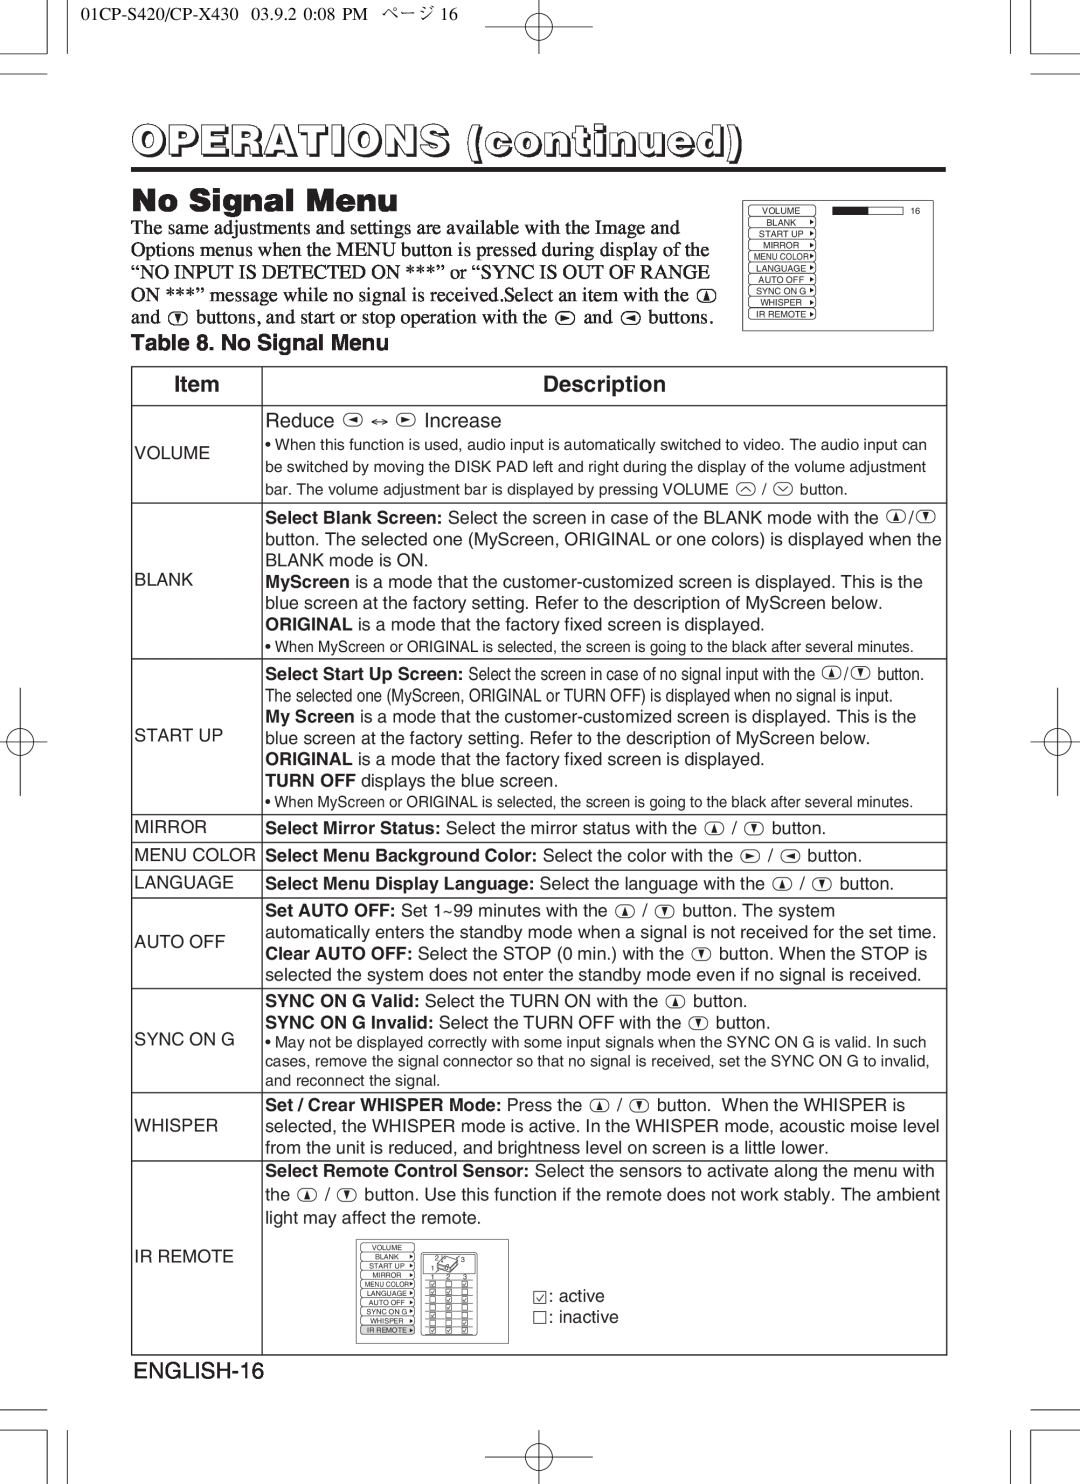 Hitachi CP-X430WA, CP-S420WA user manual No Signal Menu, OPERATIONS continued, Description 